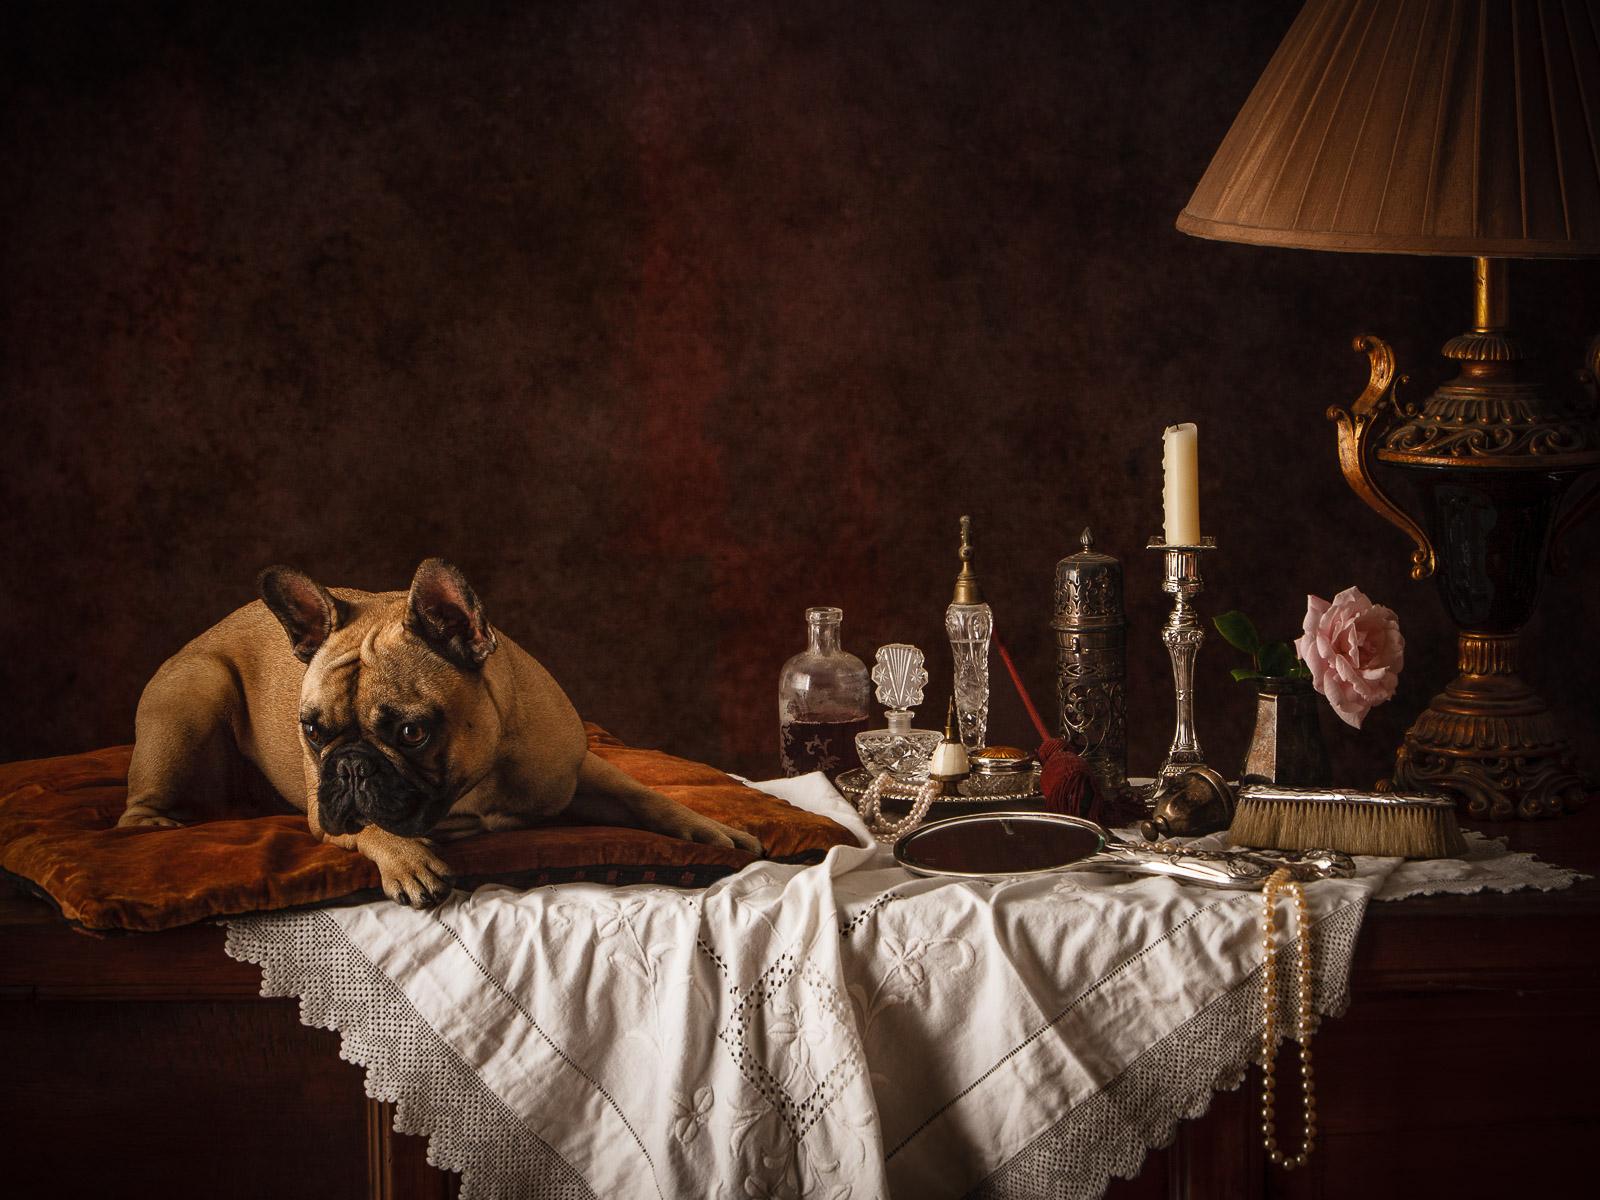 Tim Platt Color Photograph - Dutch dog #4 French Bulldog - Signed limited edition fine art print, Still life